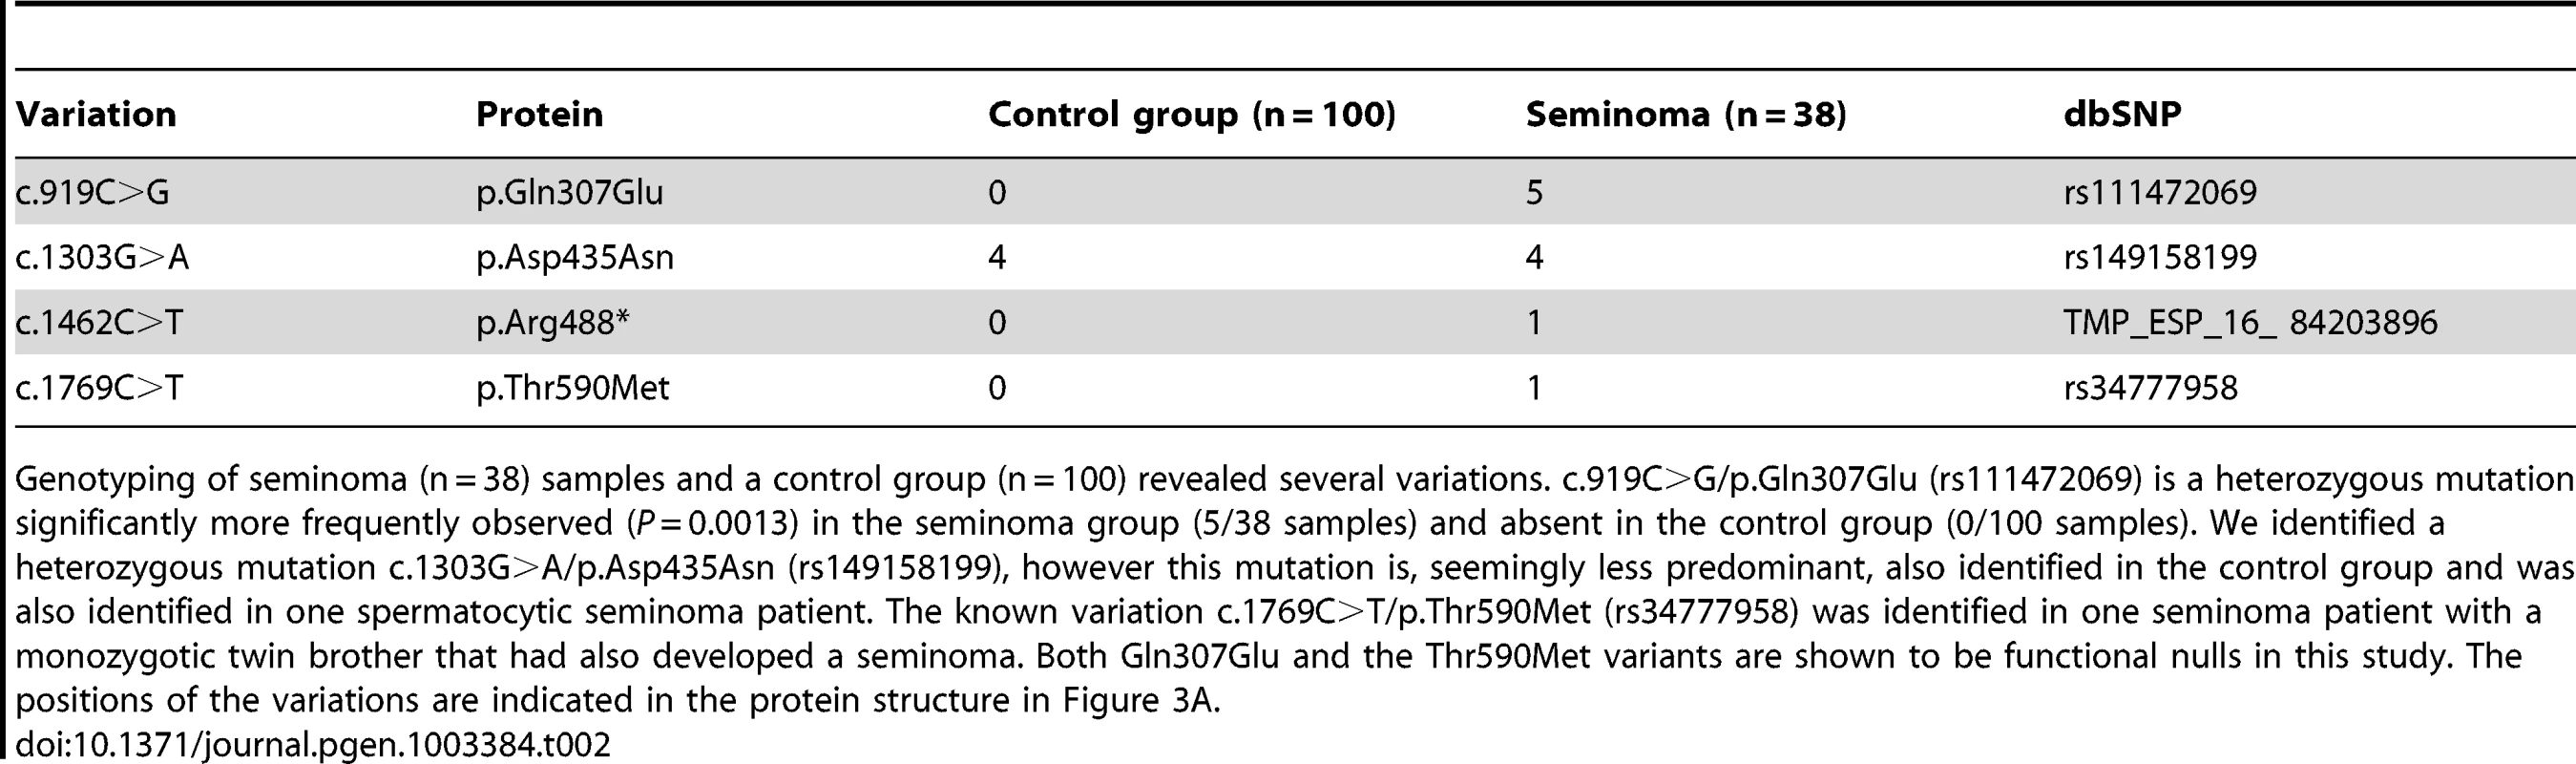 Genetic variation of <i>LRRC50</i> in human seminomas.